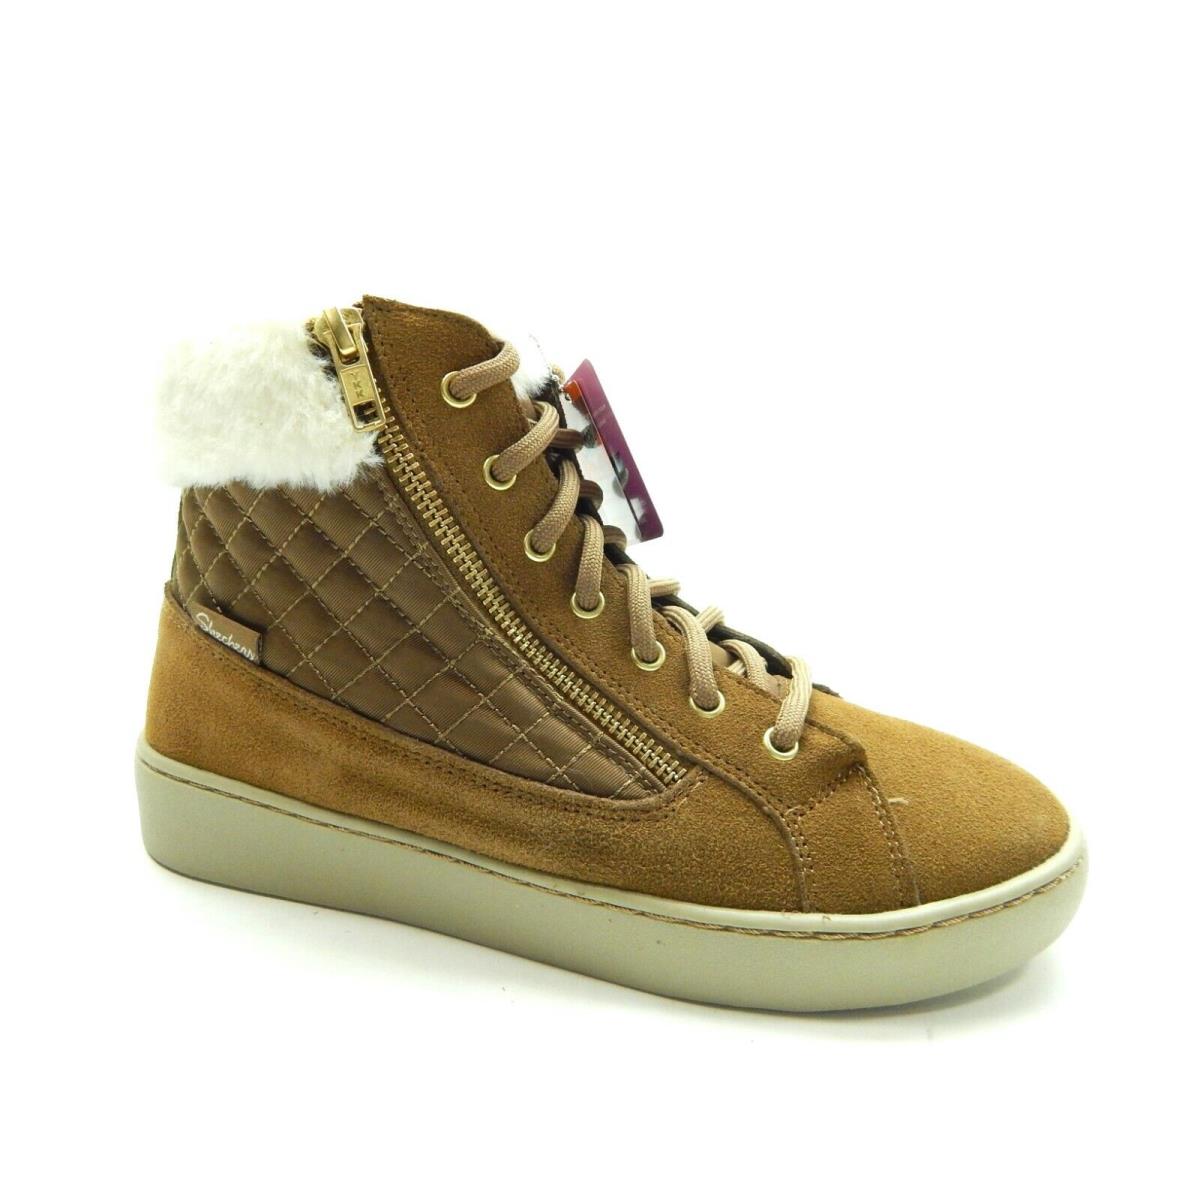 Skechers Warm Boots Brown 44390 Women Shoes Size 7.5